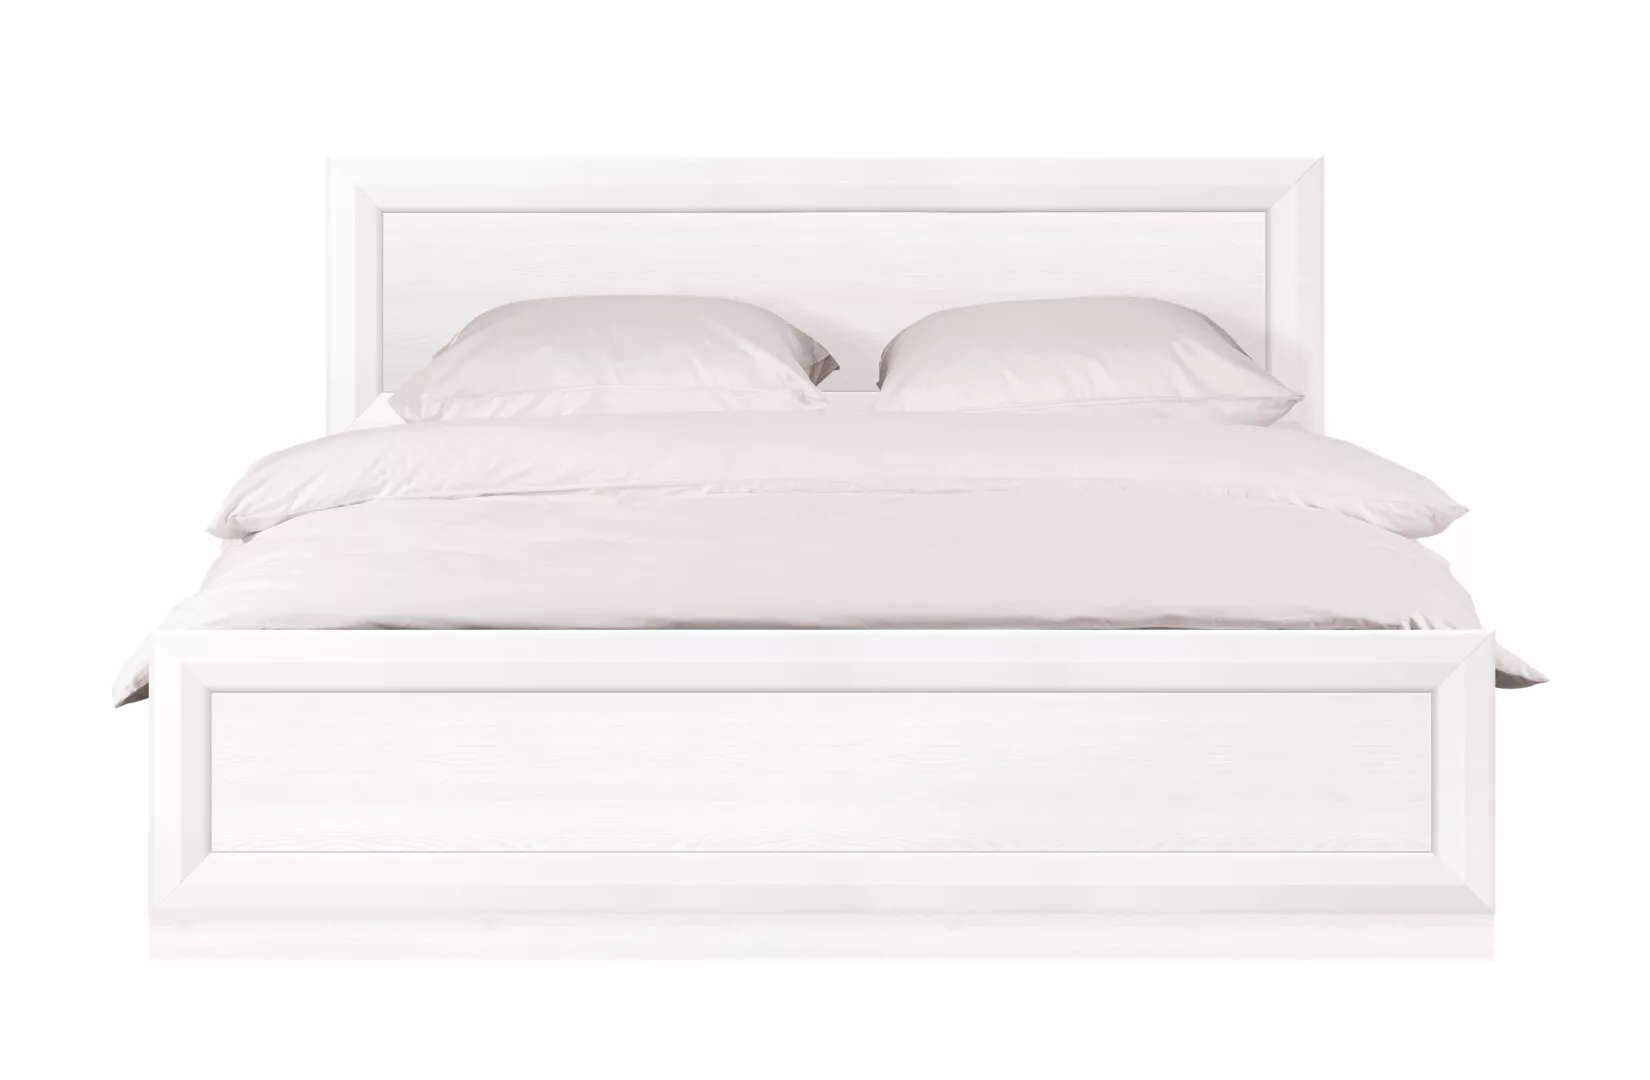 Спальня | Кровати | МАЛЬТА Кровать LOZ 140x200 Мебель ☆ IDEA в Севастополе| BRW, Брест anons